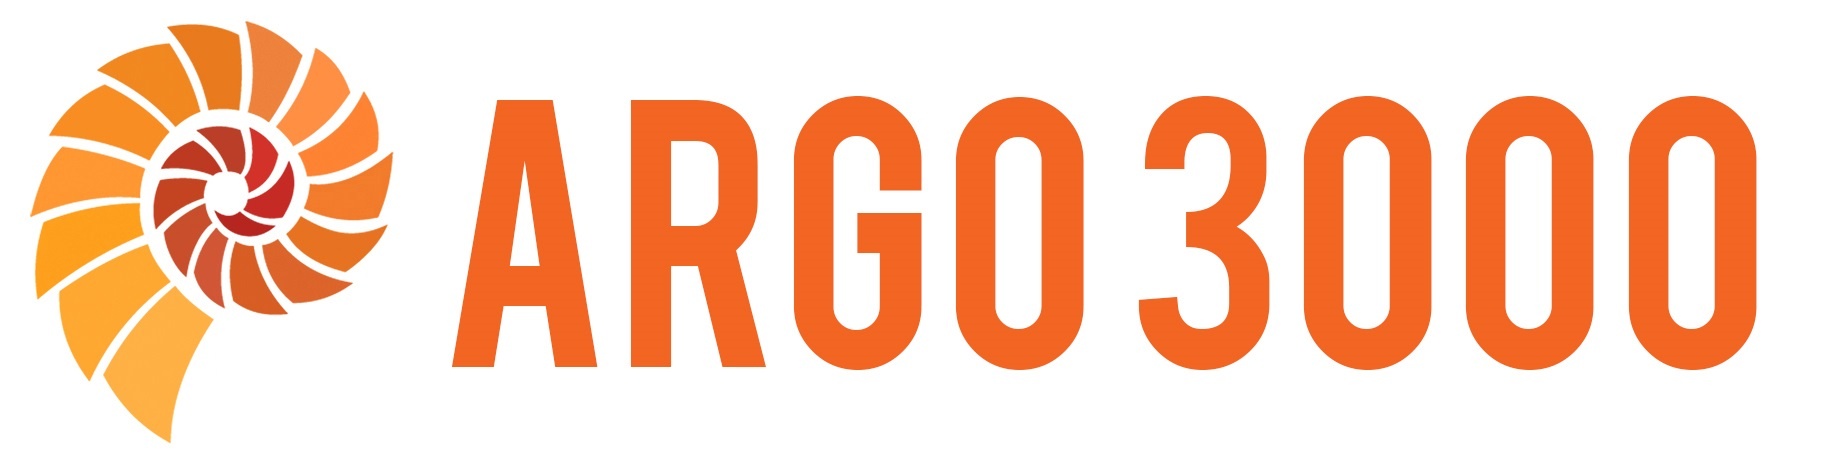 Argo3000